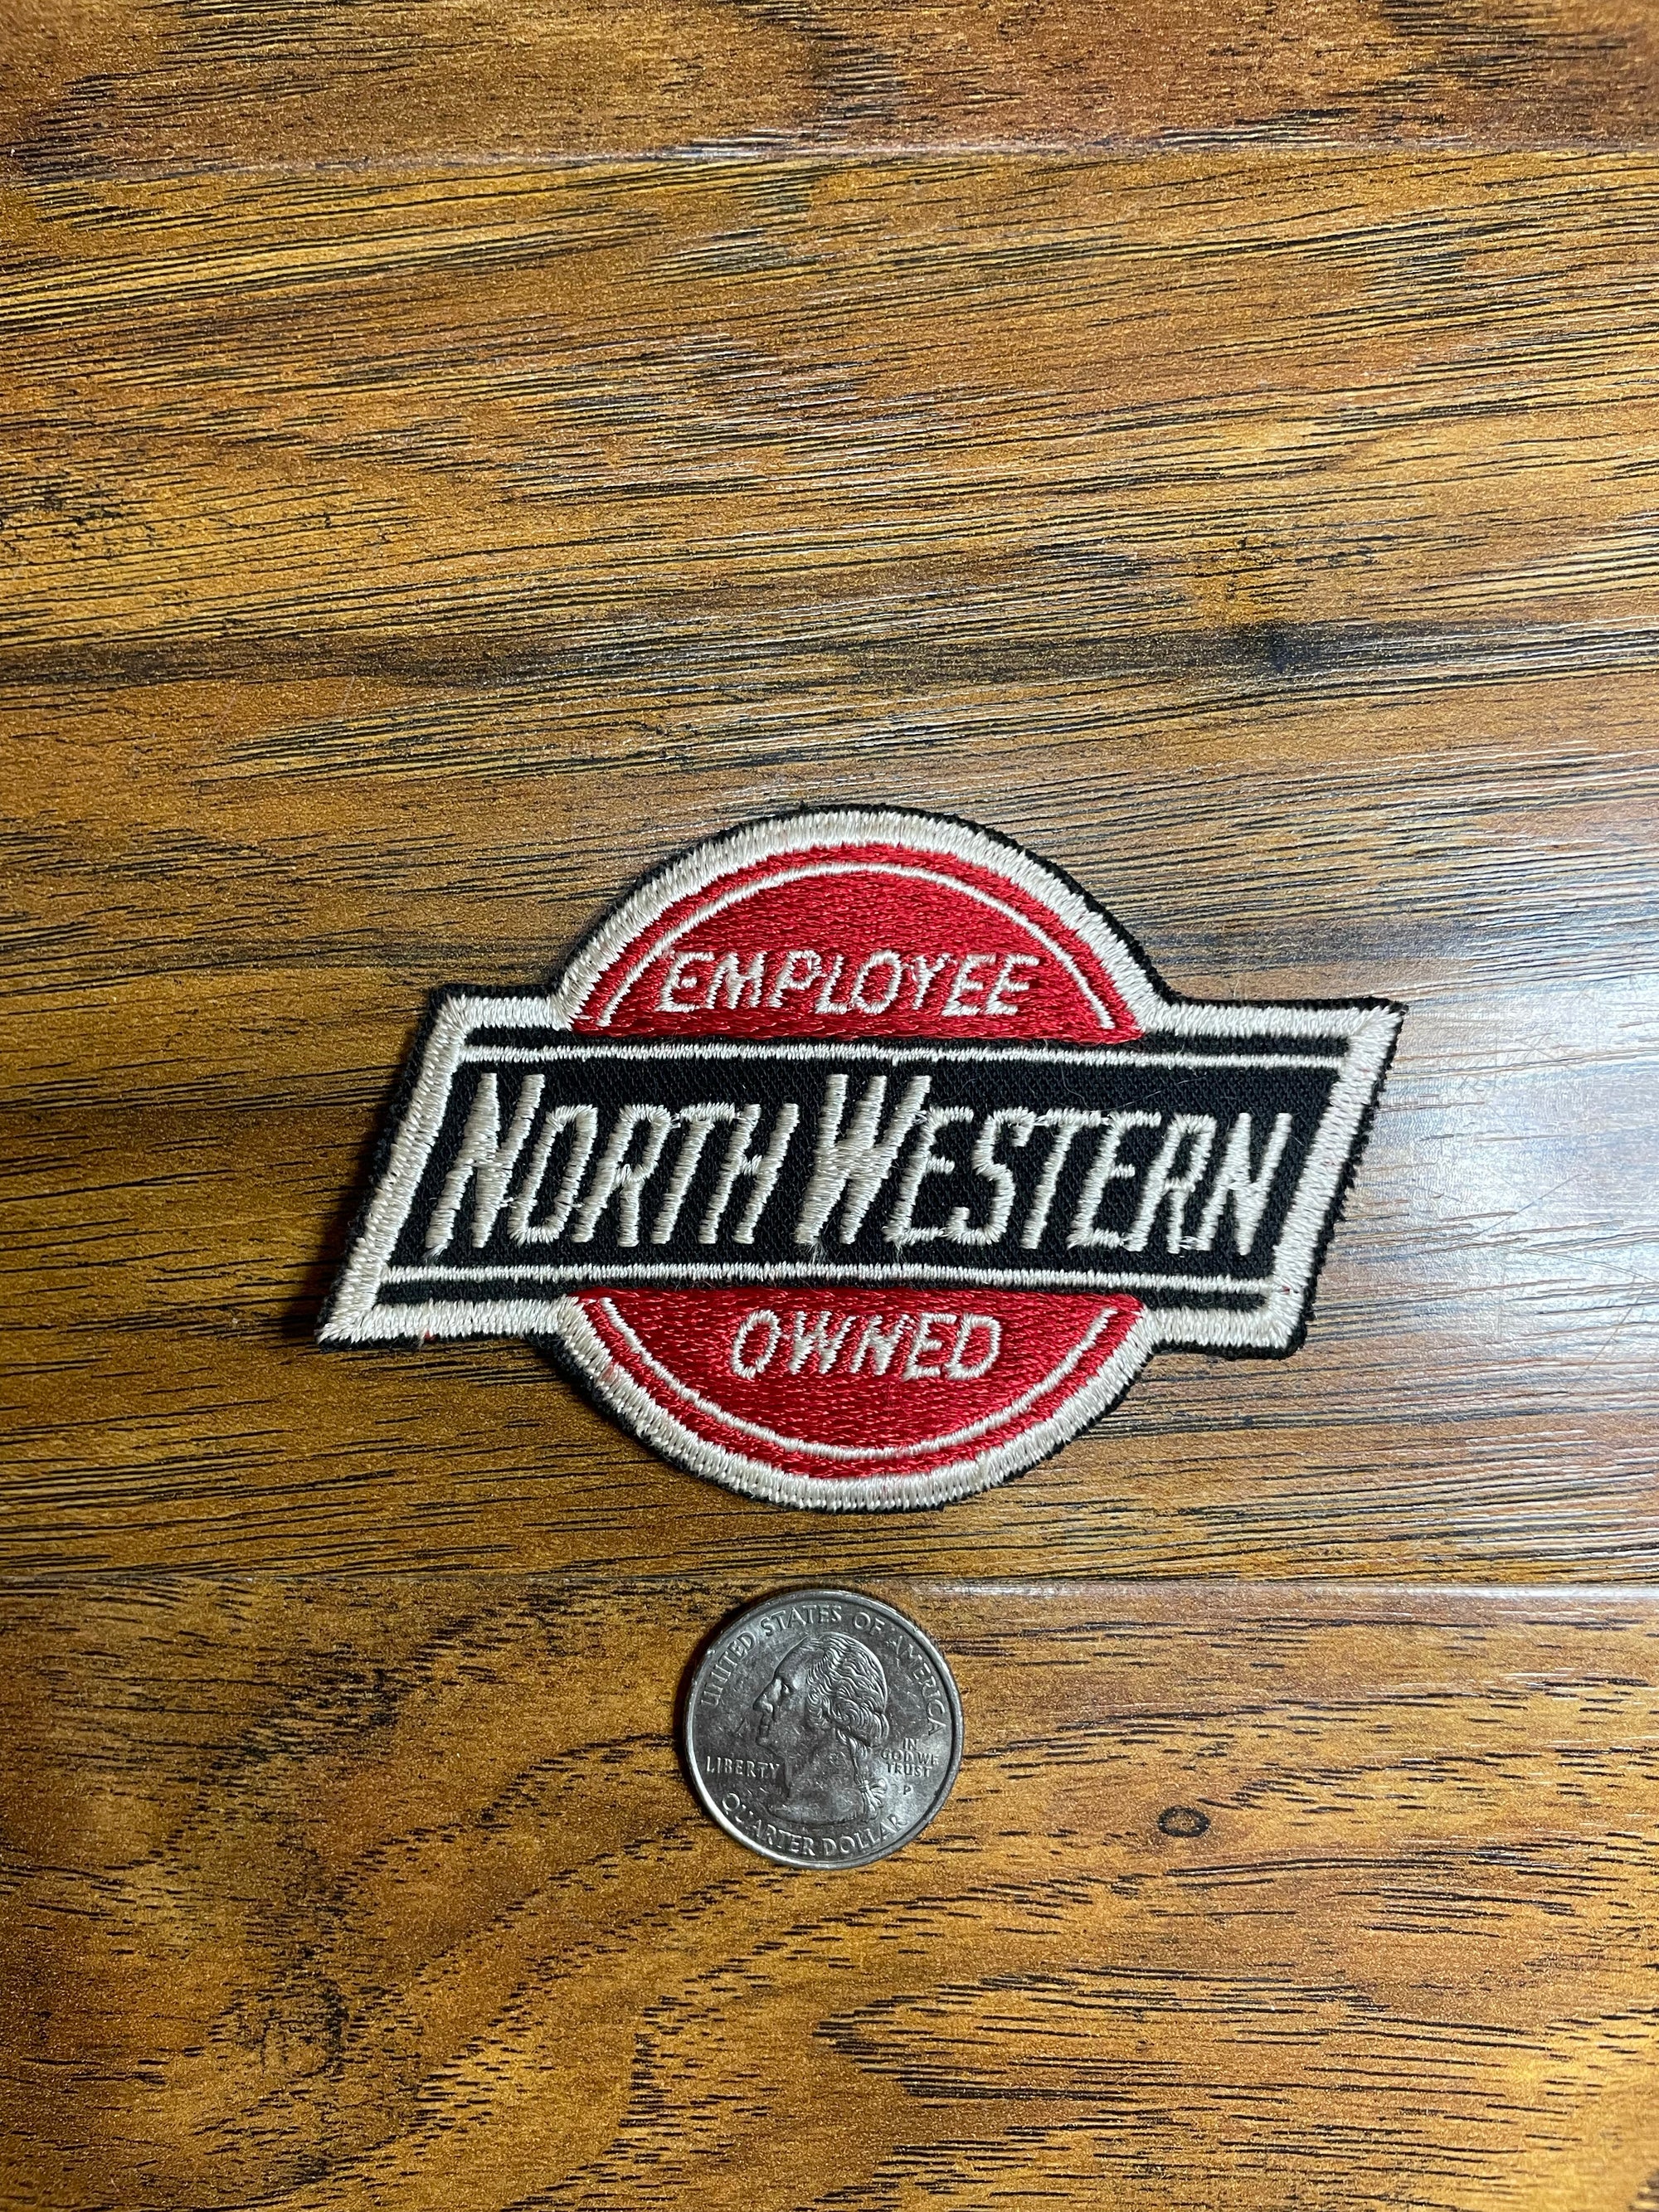 Vintage Employee North Western